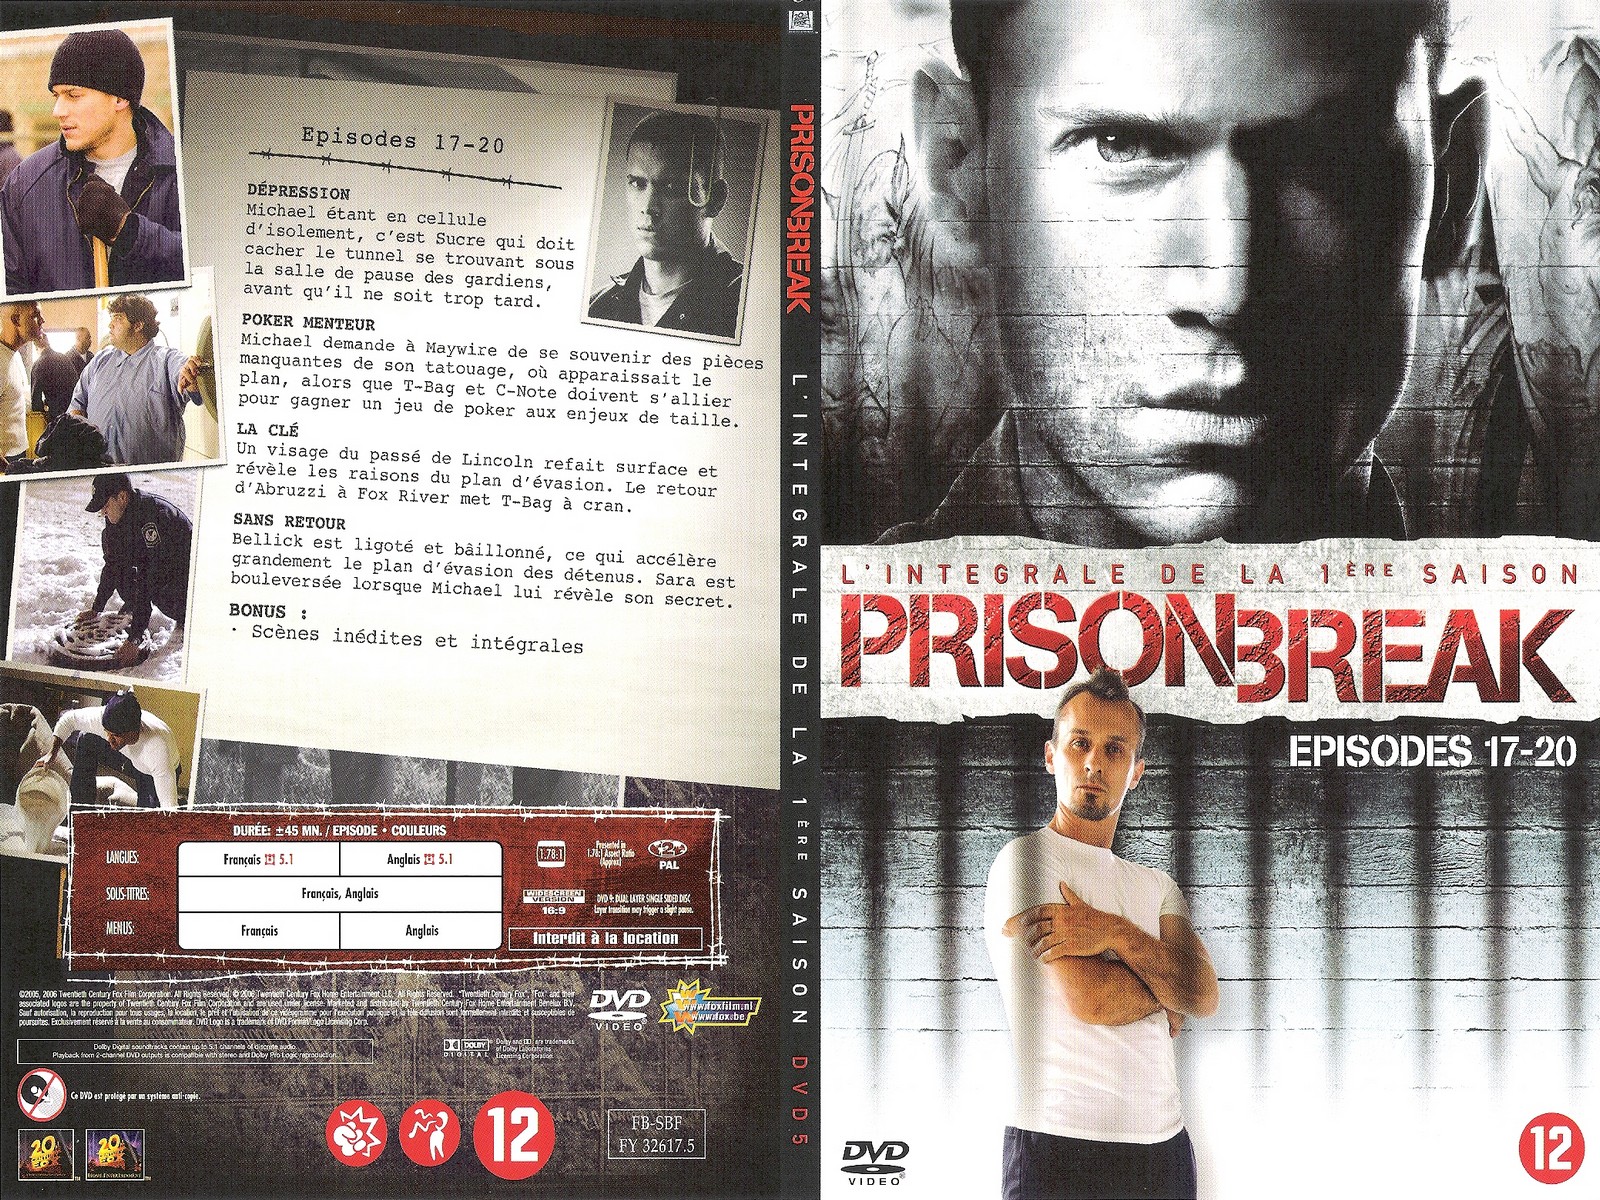 Jaquette DVD Prison break saison 1 dvd 5 - SLIM